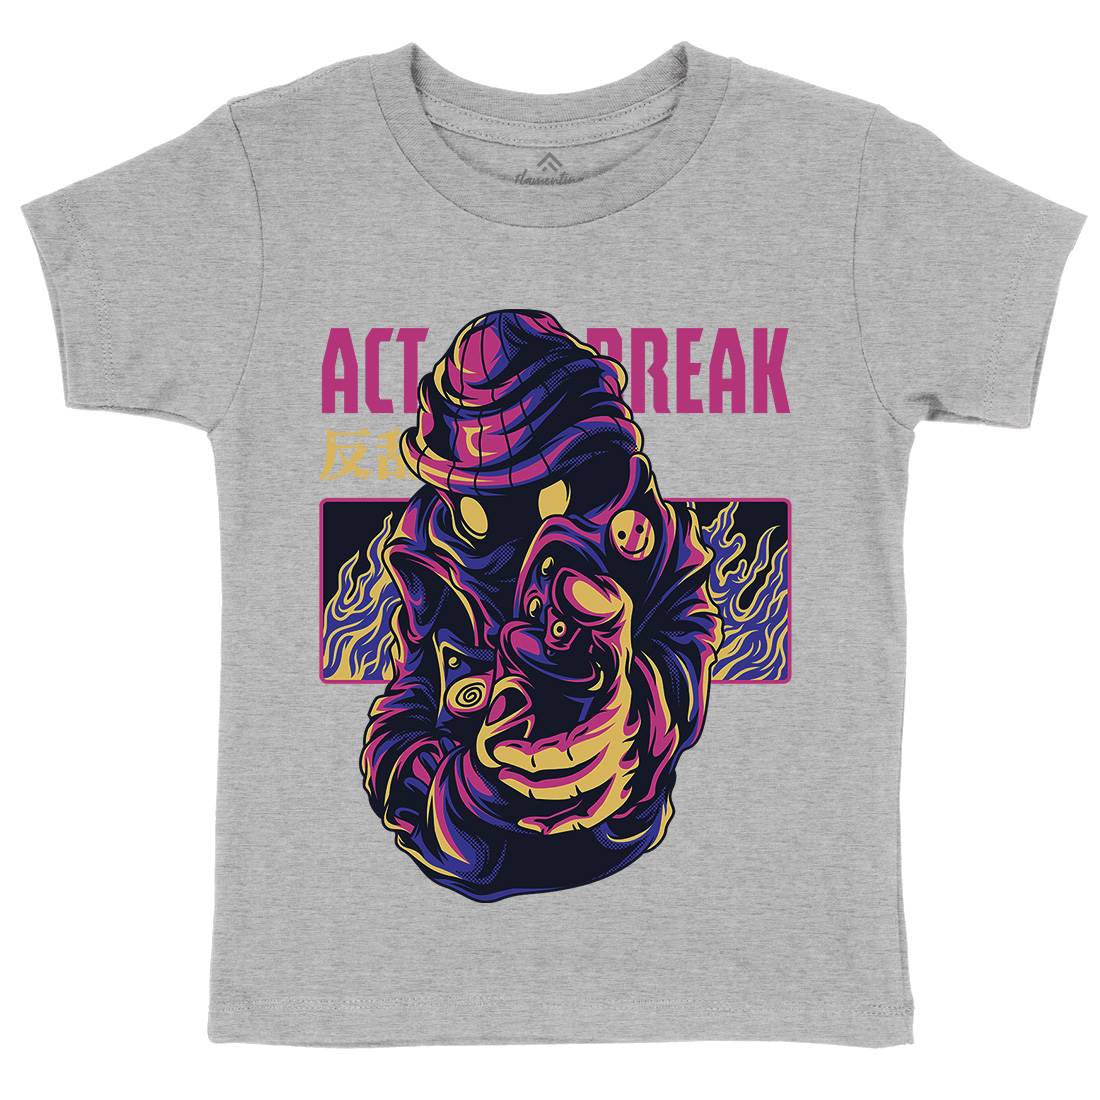 Act Break Kids Crew Neck T-Shirt Graffiti D700